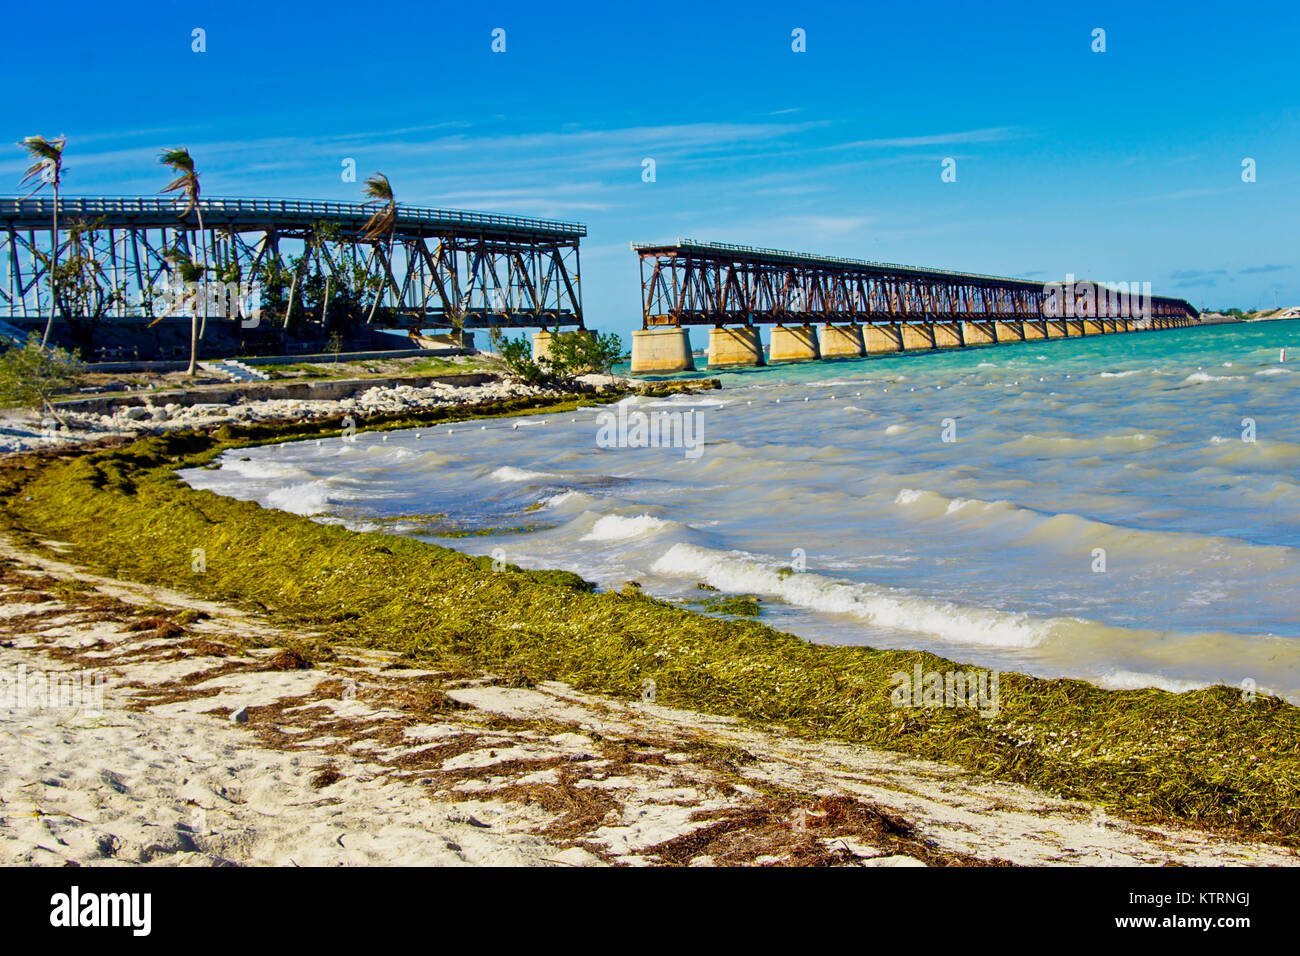 Bahia Honda Key with Bridge Stock Photo